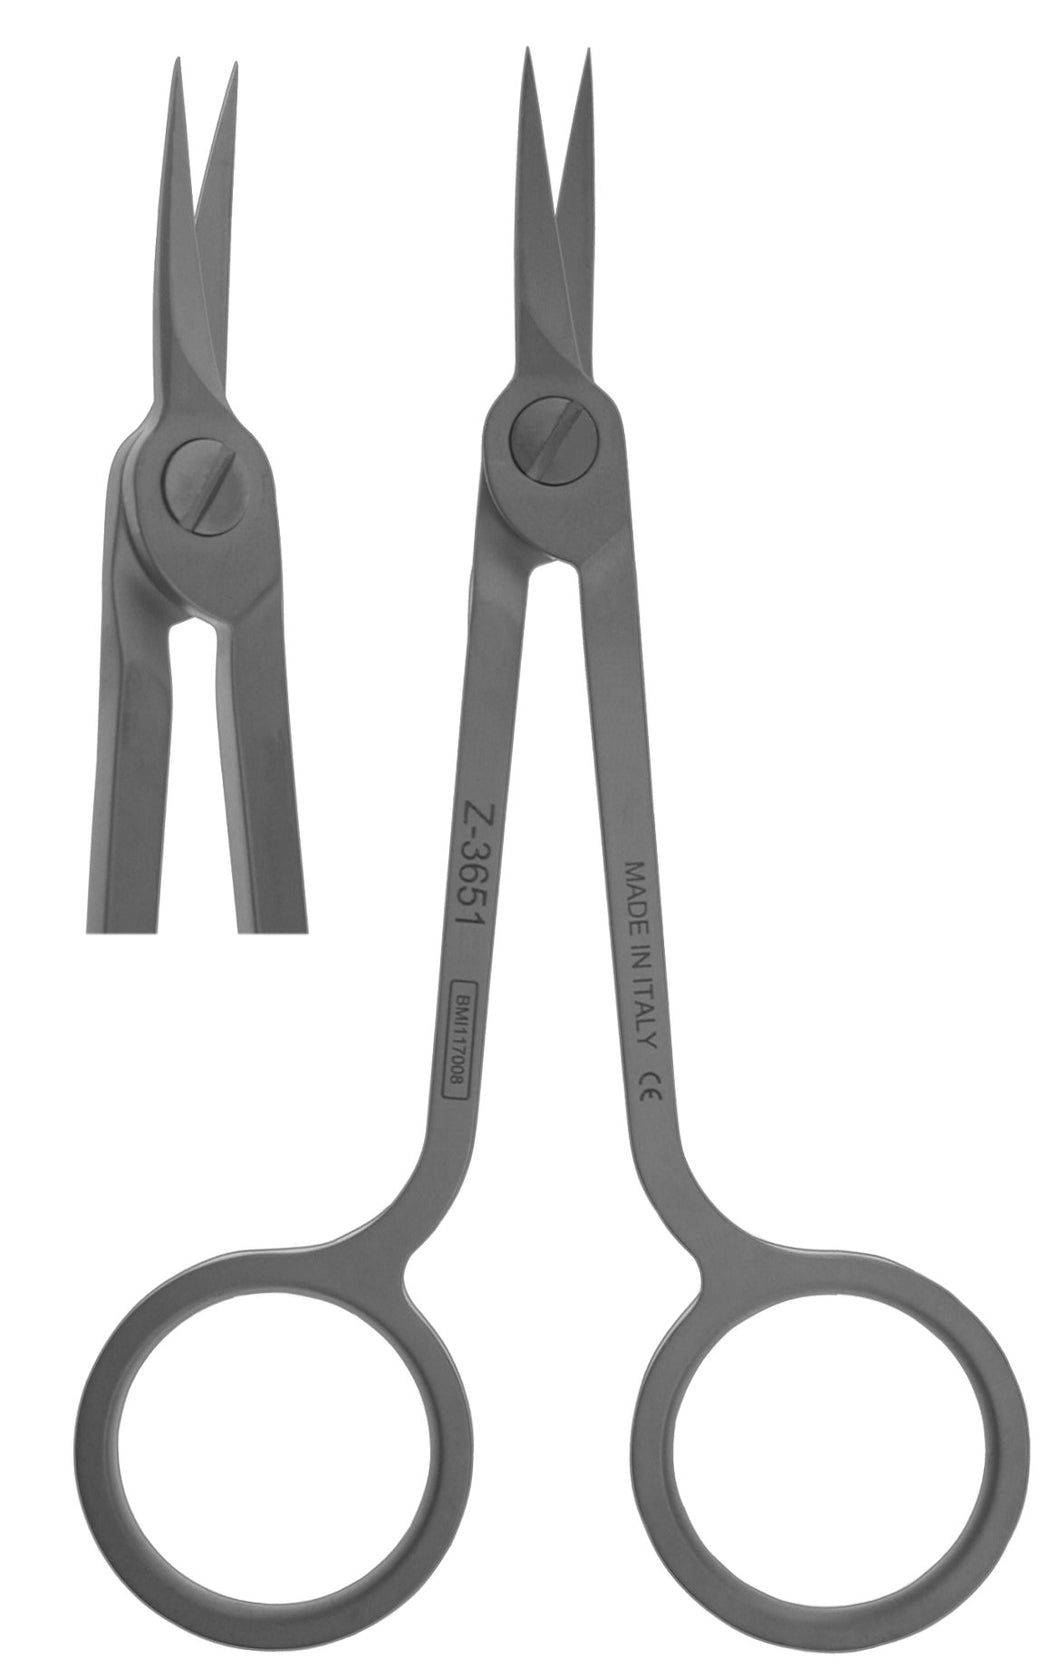 Scissors, Hi-Tech Curved Stainless 11.5cm  (Z-3651)